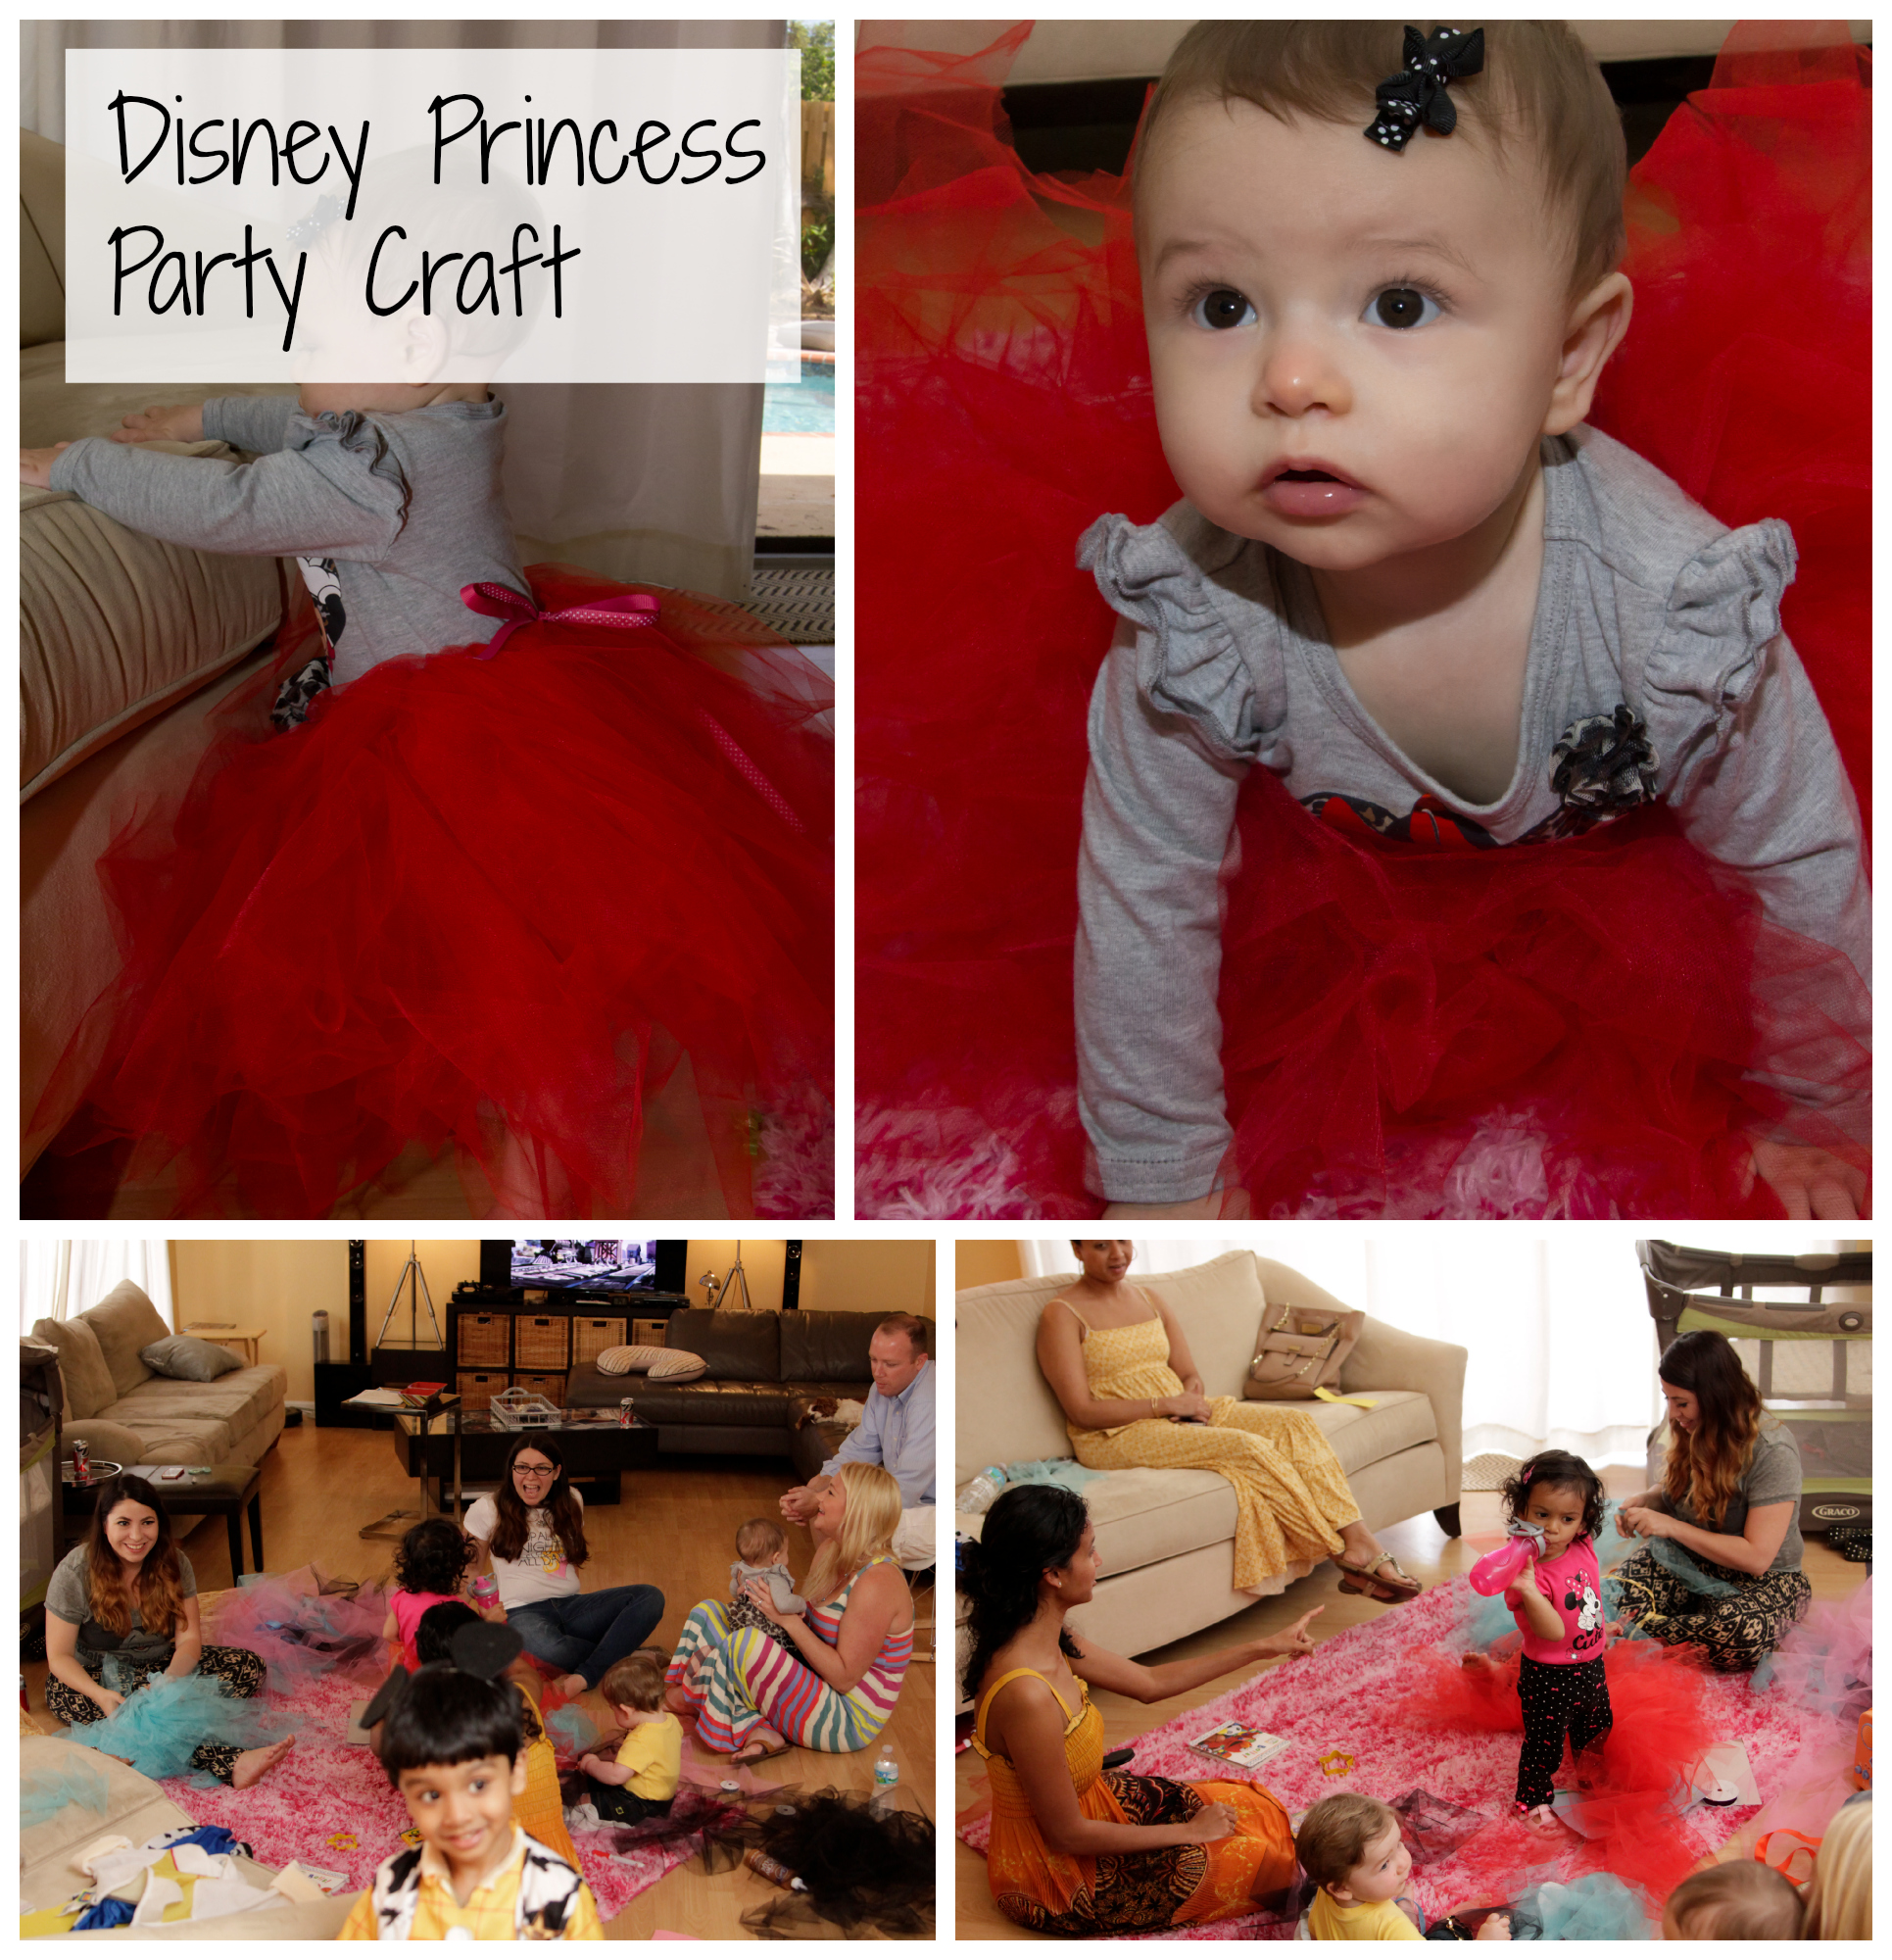 Disney Princess Party Craft DIY .jpg